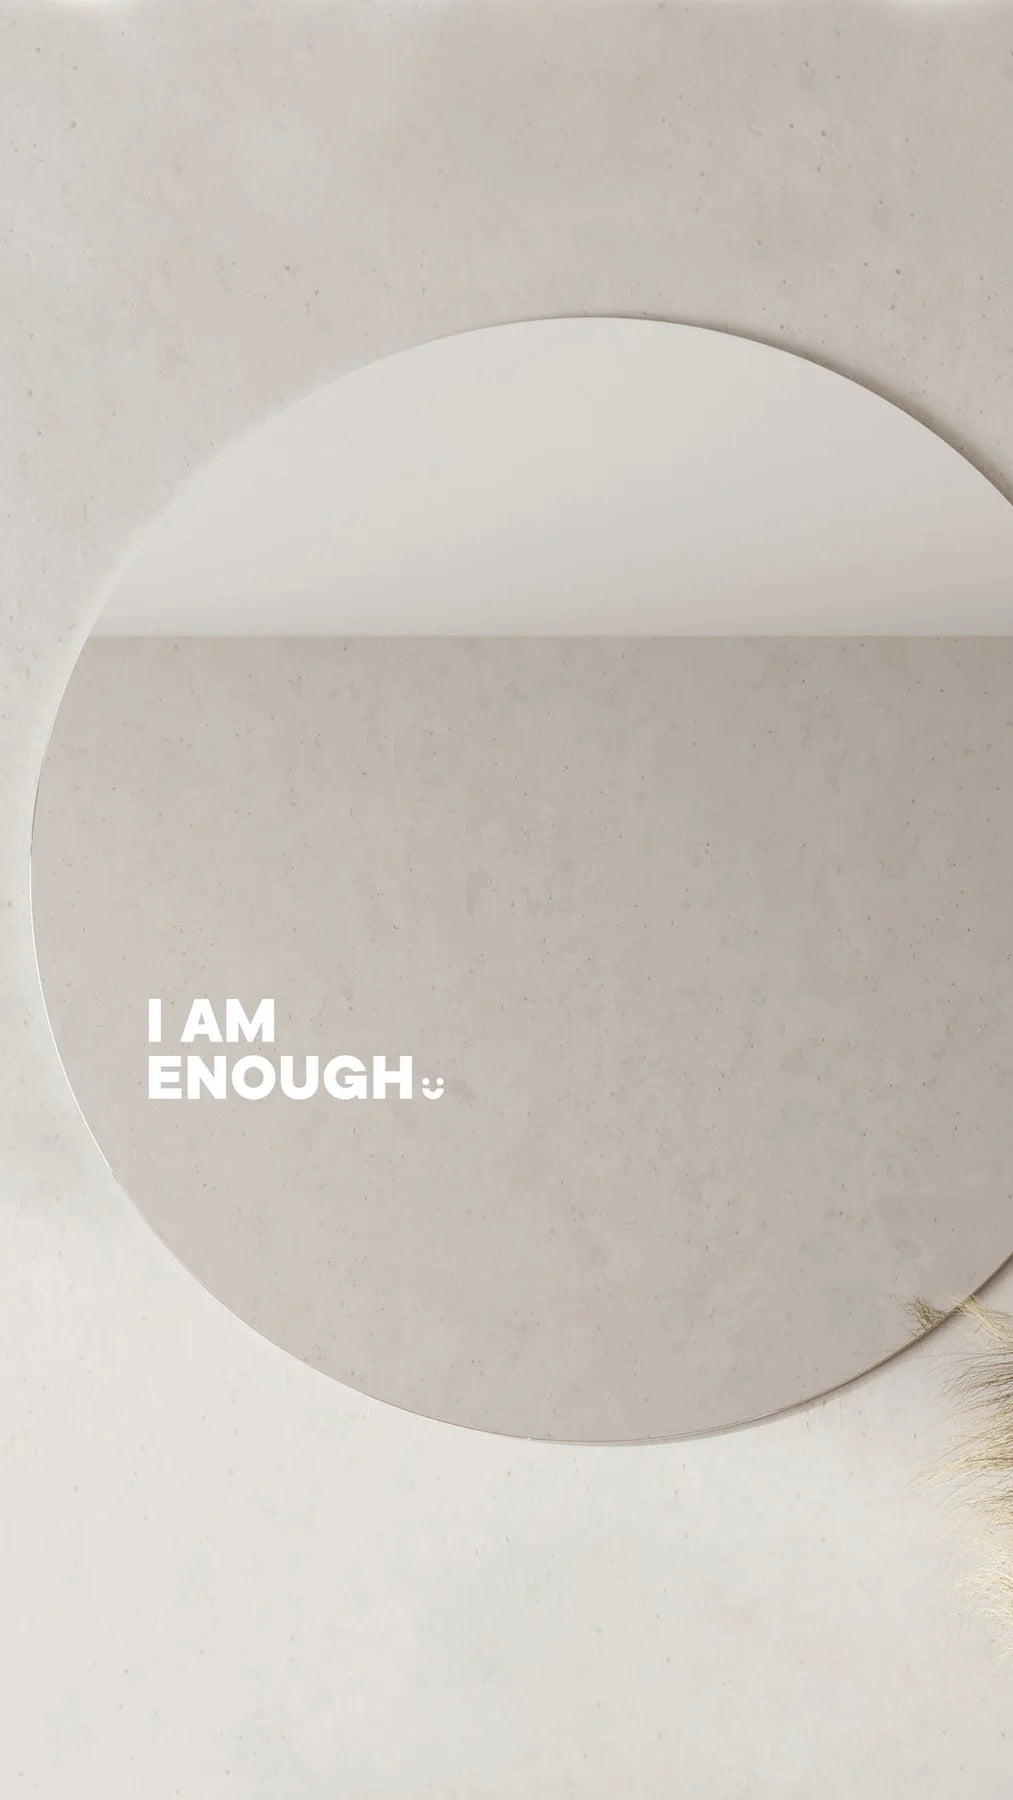 I Am Enough - Affirmation Sticker